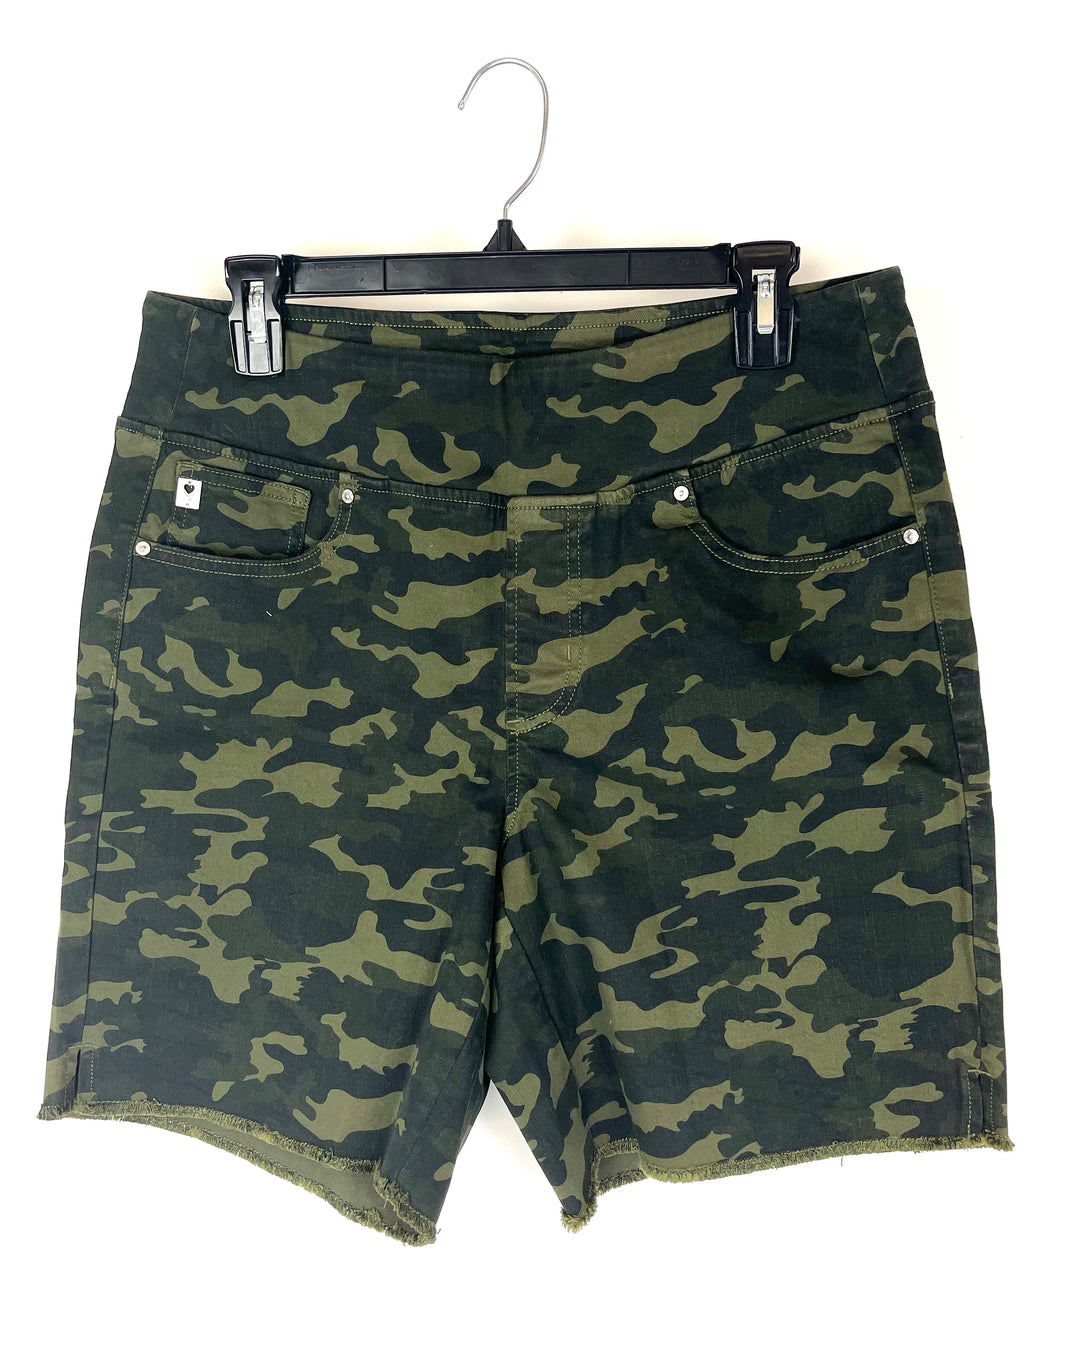 Green Camo Shorts - Size 12/14